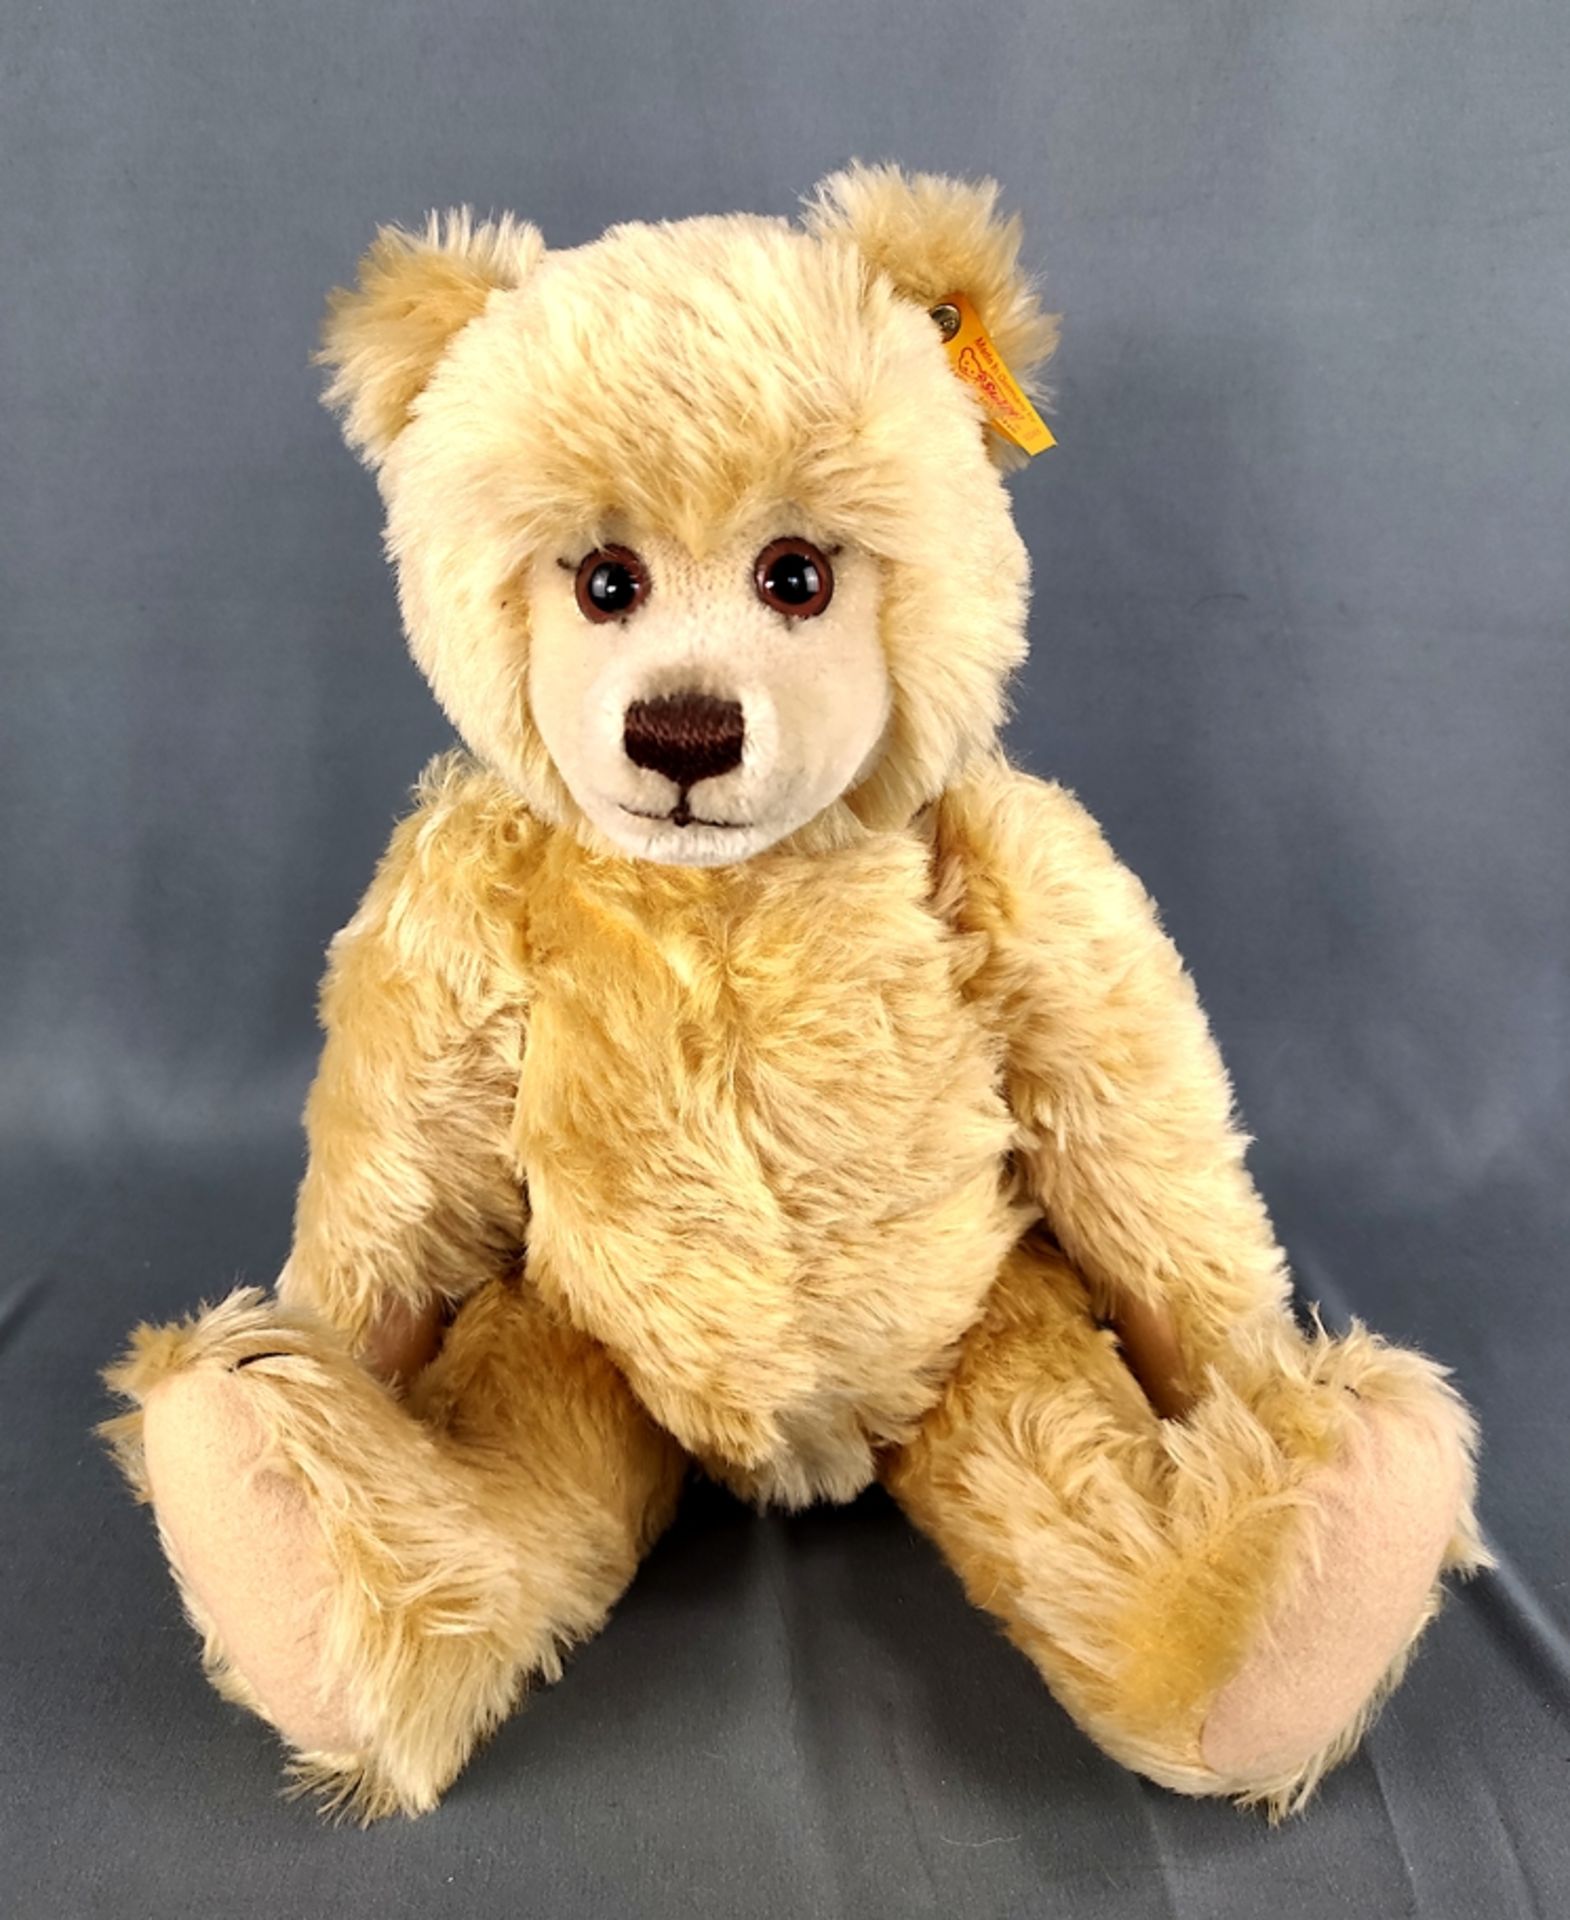 Steiff replica teddy bear, 010408, beige mohair, 1991-1995, tipping voice, height 42cm